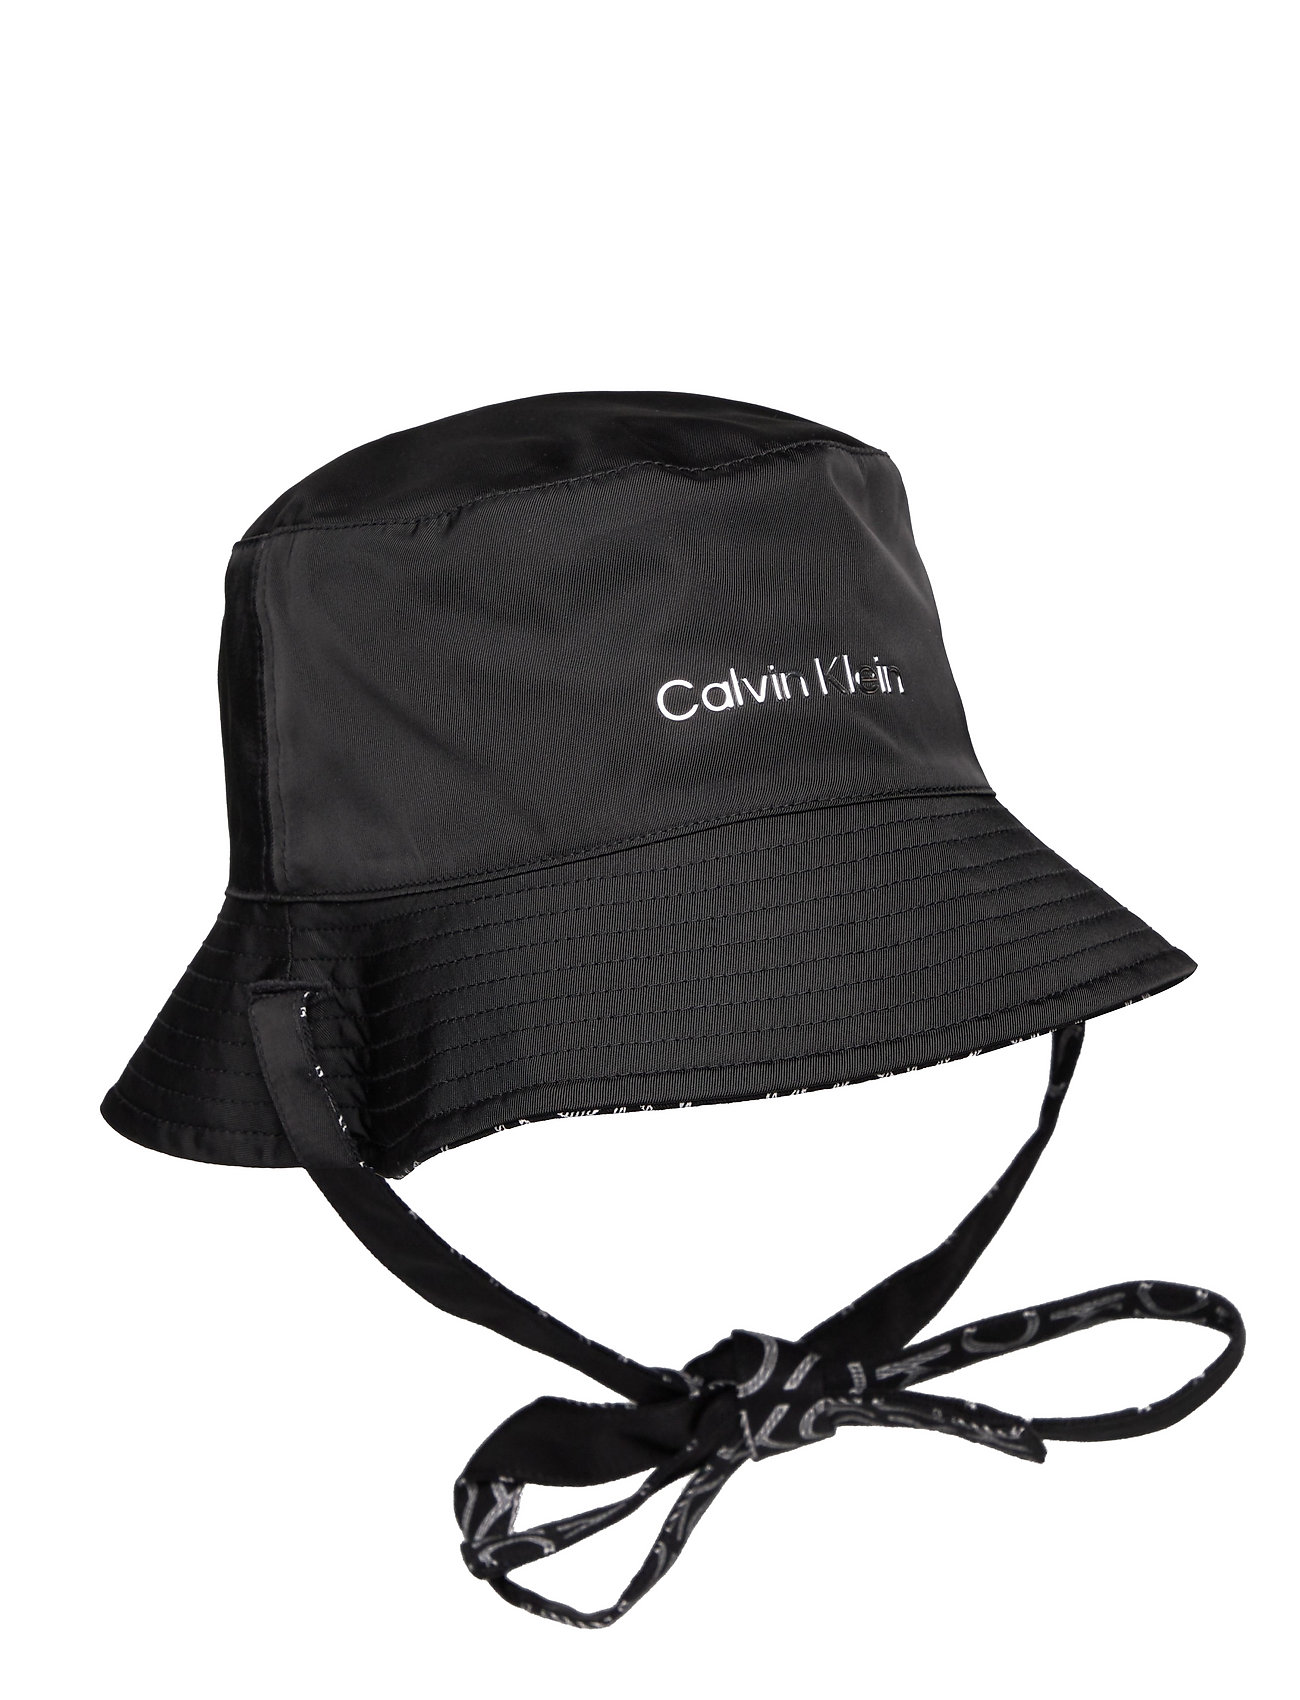 Calvin Klein Tpu Branding Bucket Hat Mn Mix - Bucket hats 